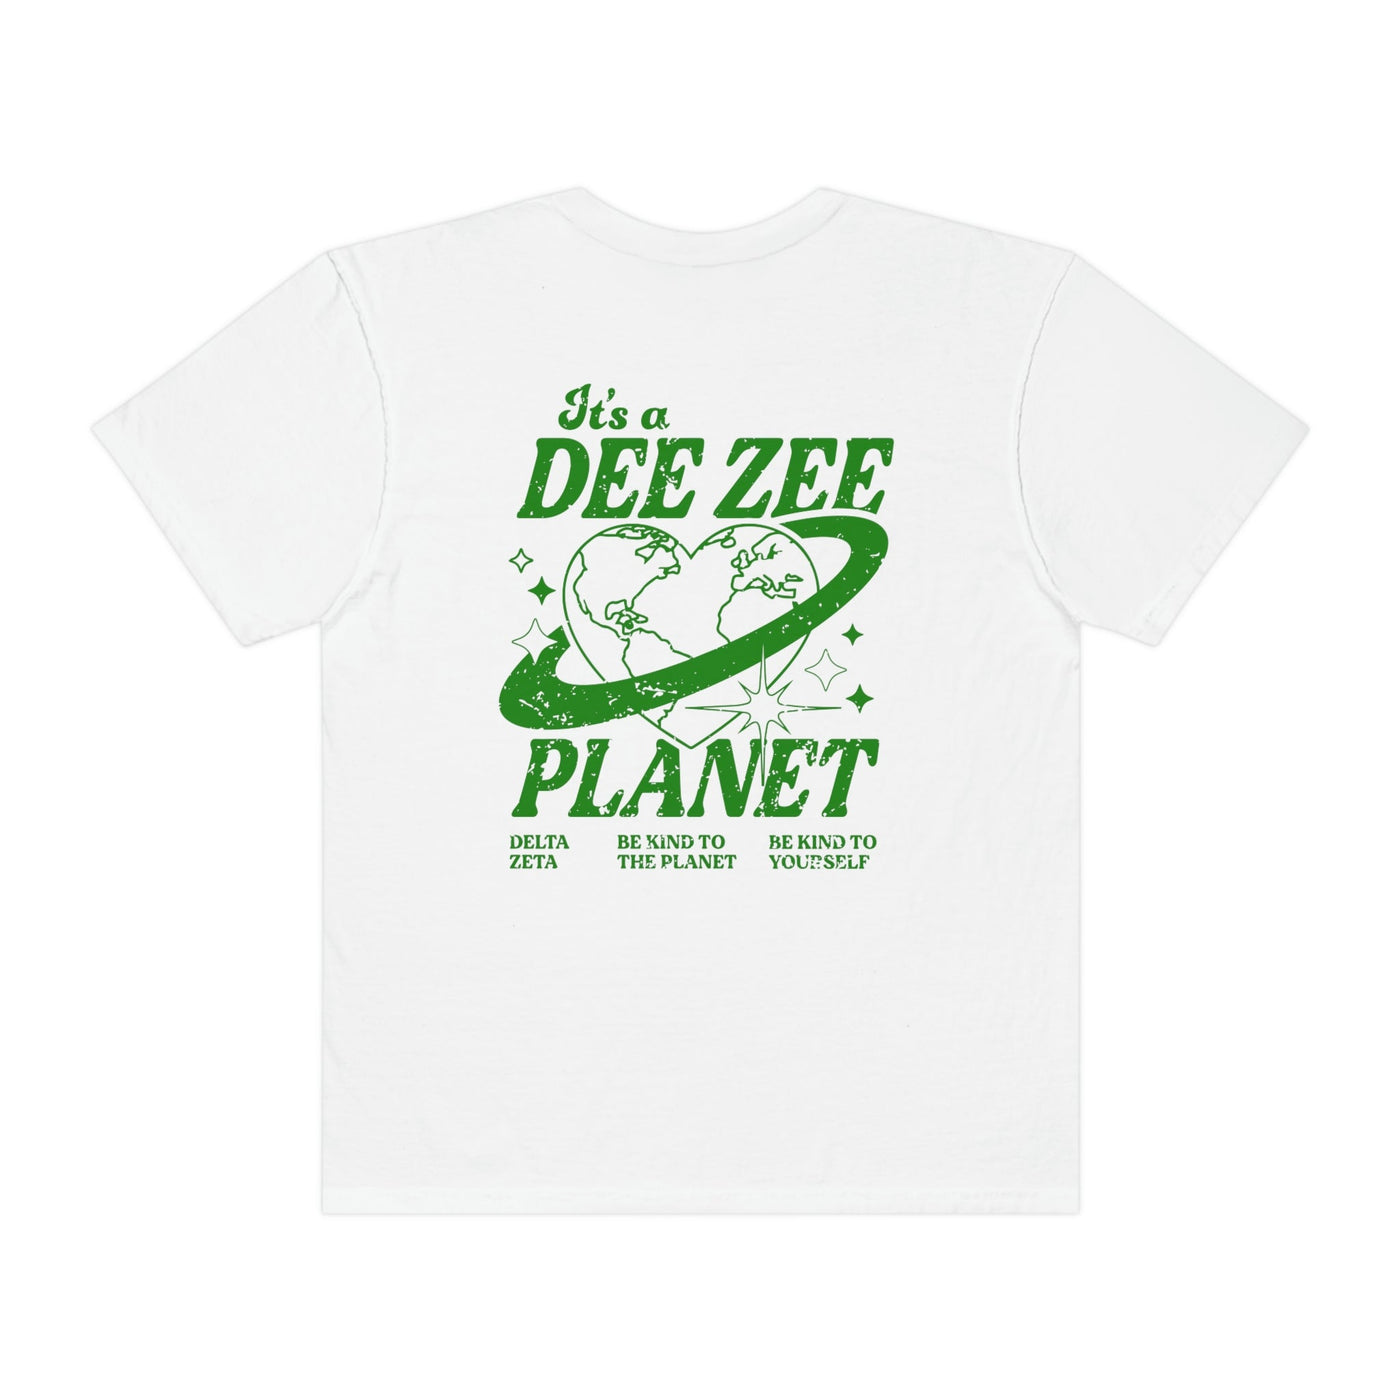 Delta Zeta Planet T-shirt | Be Kind to the Planet Trendy Sorority shirt